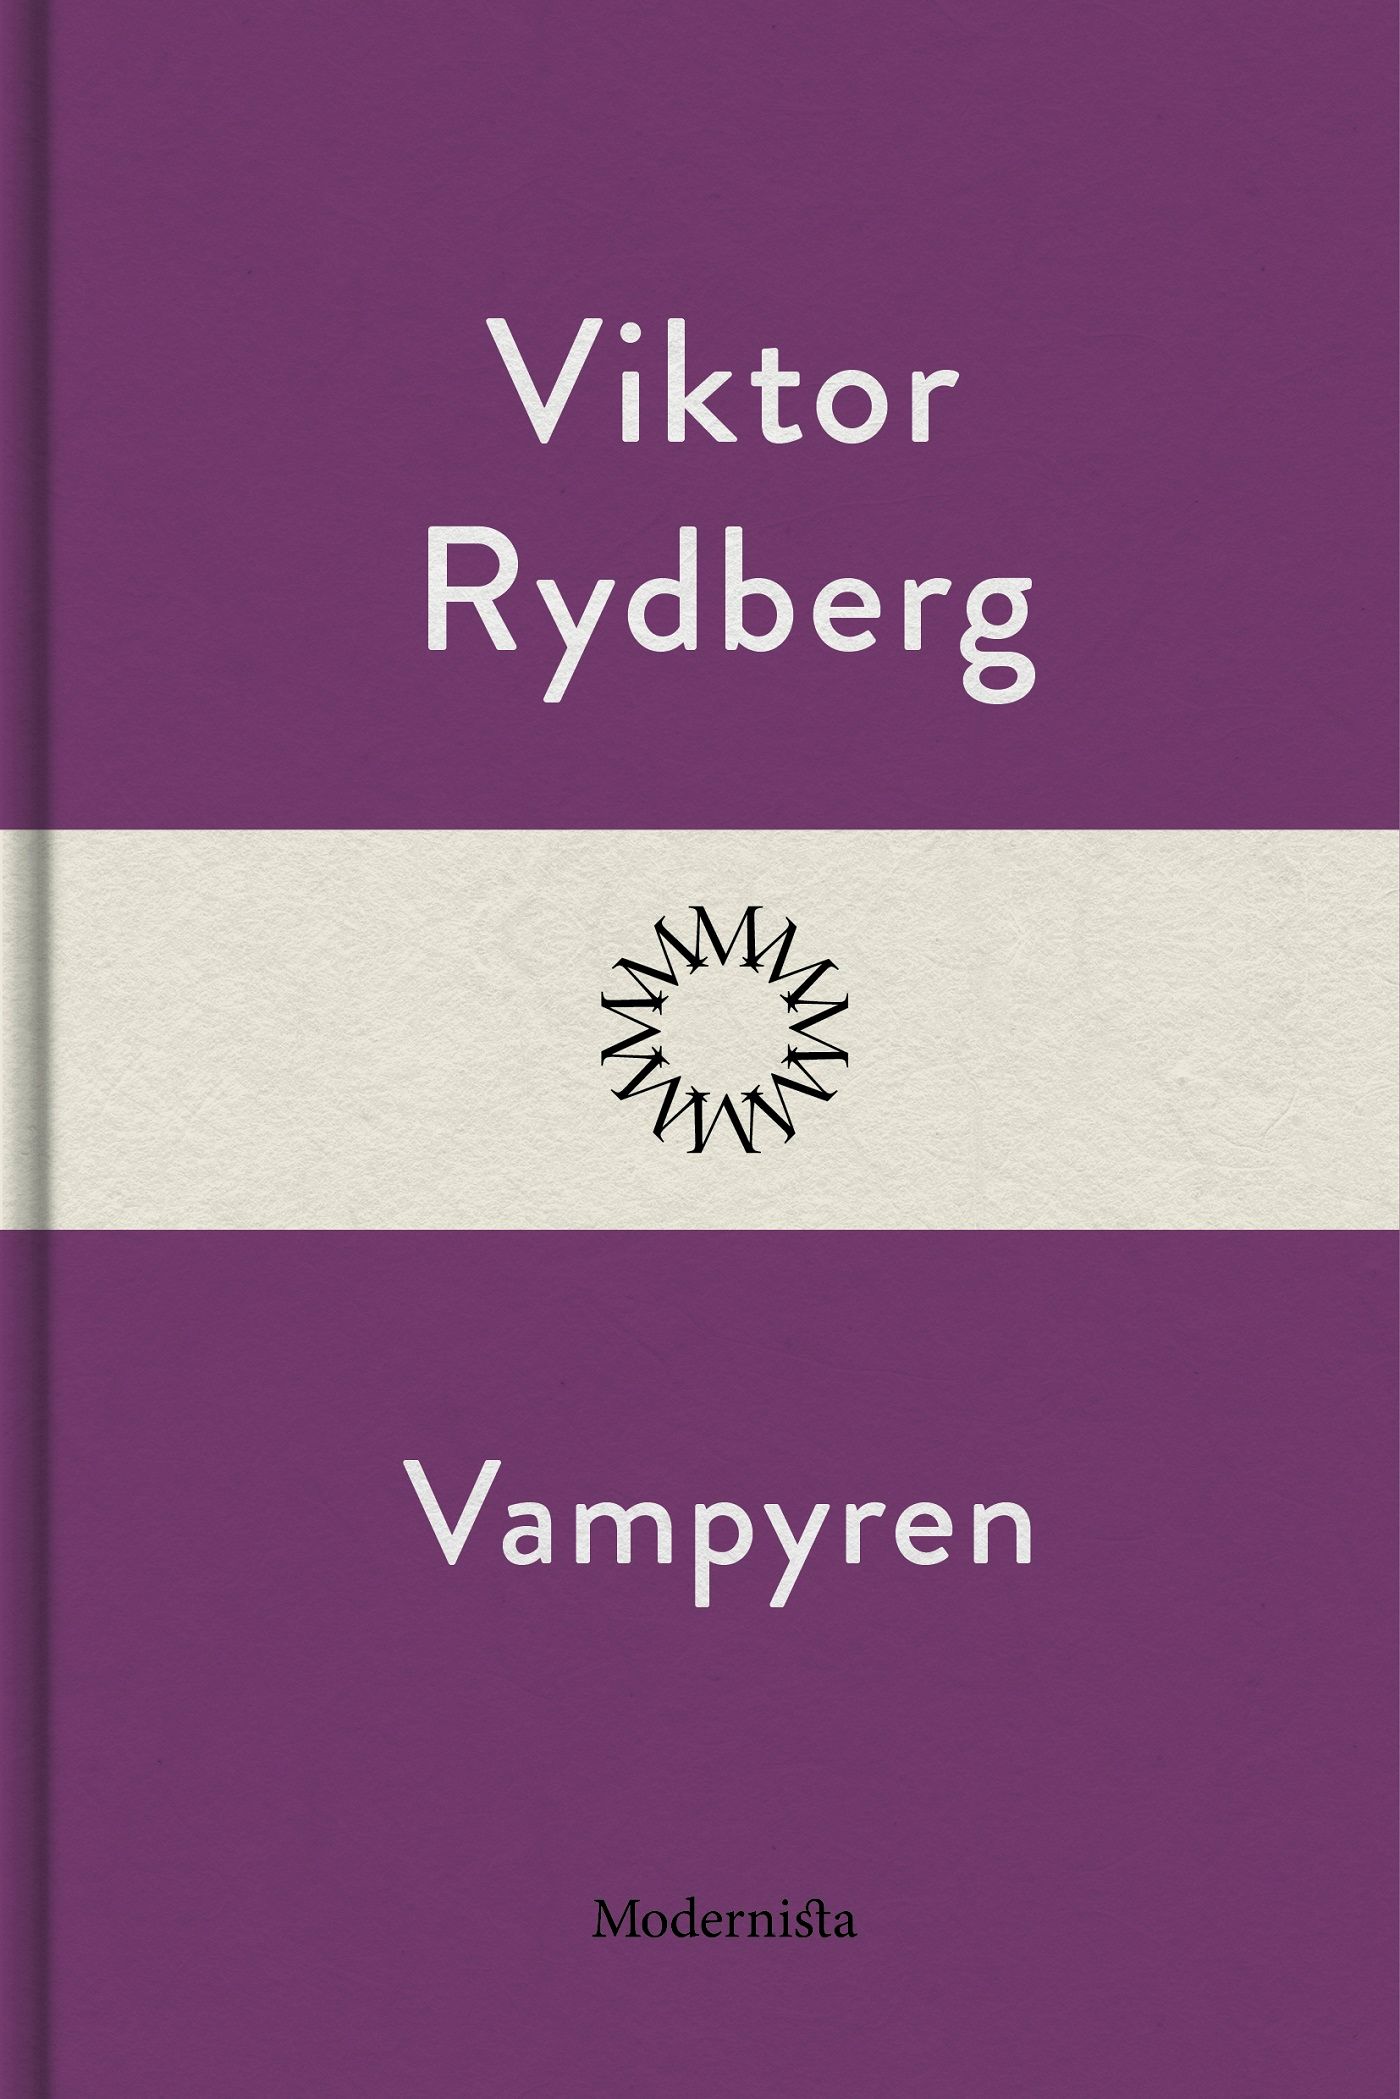 Vampyren, eBook by Viktor Rydberg